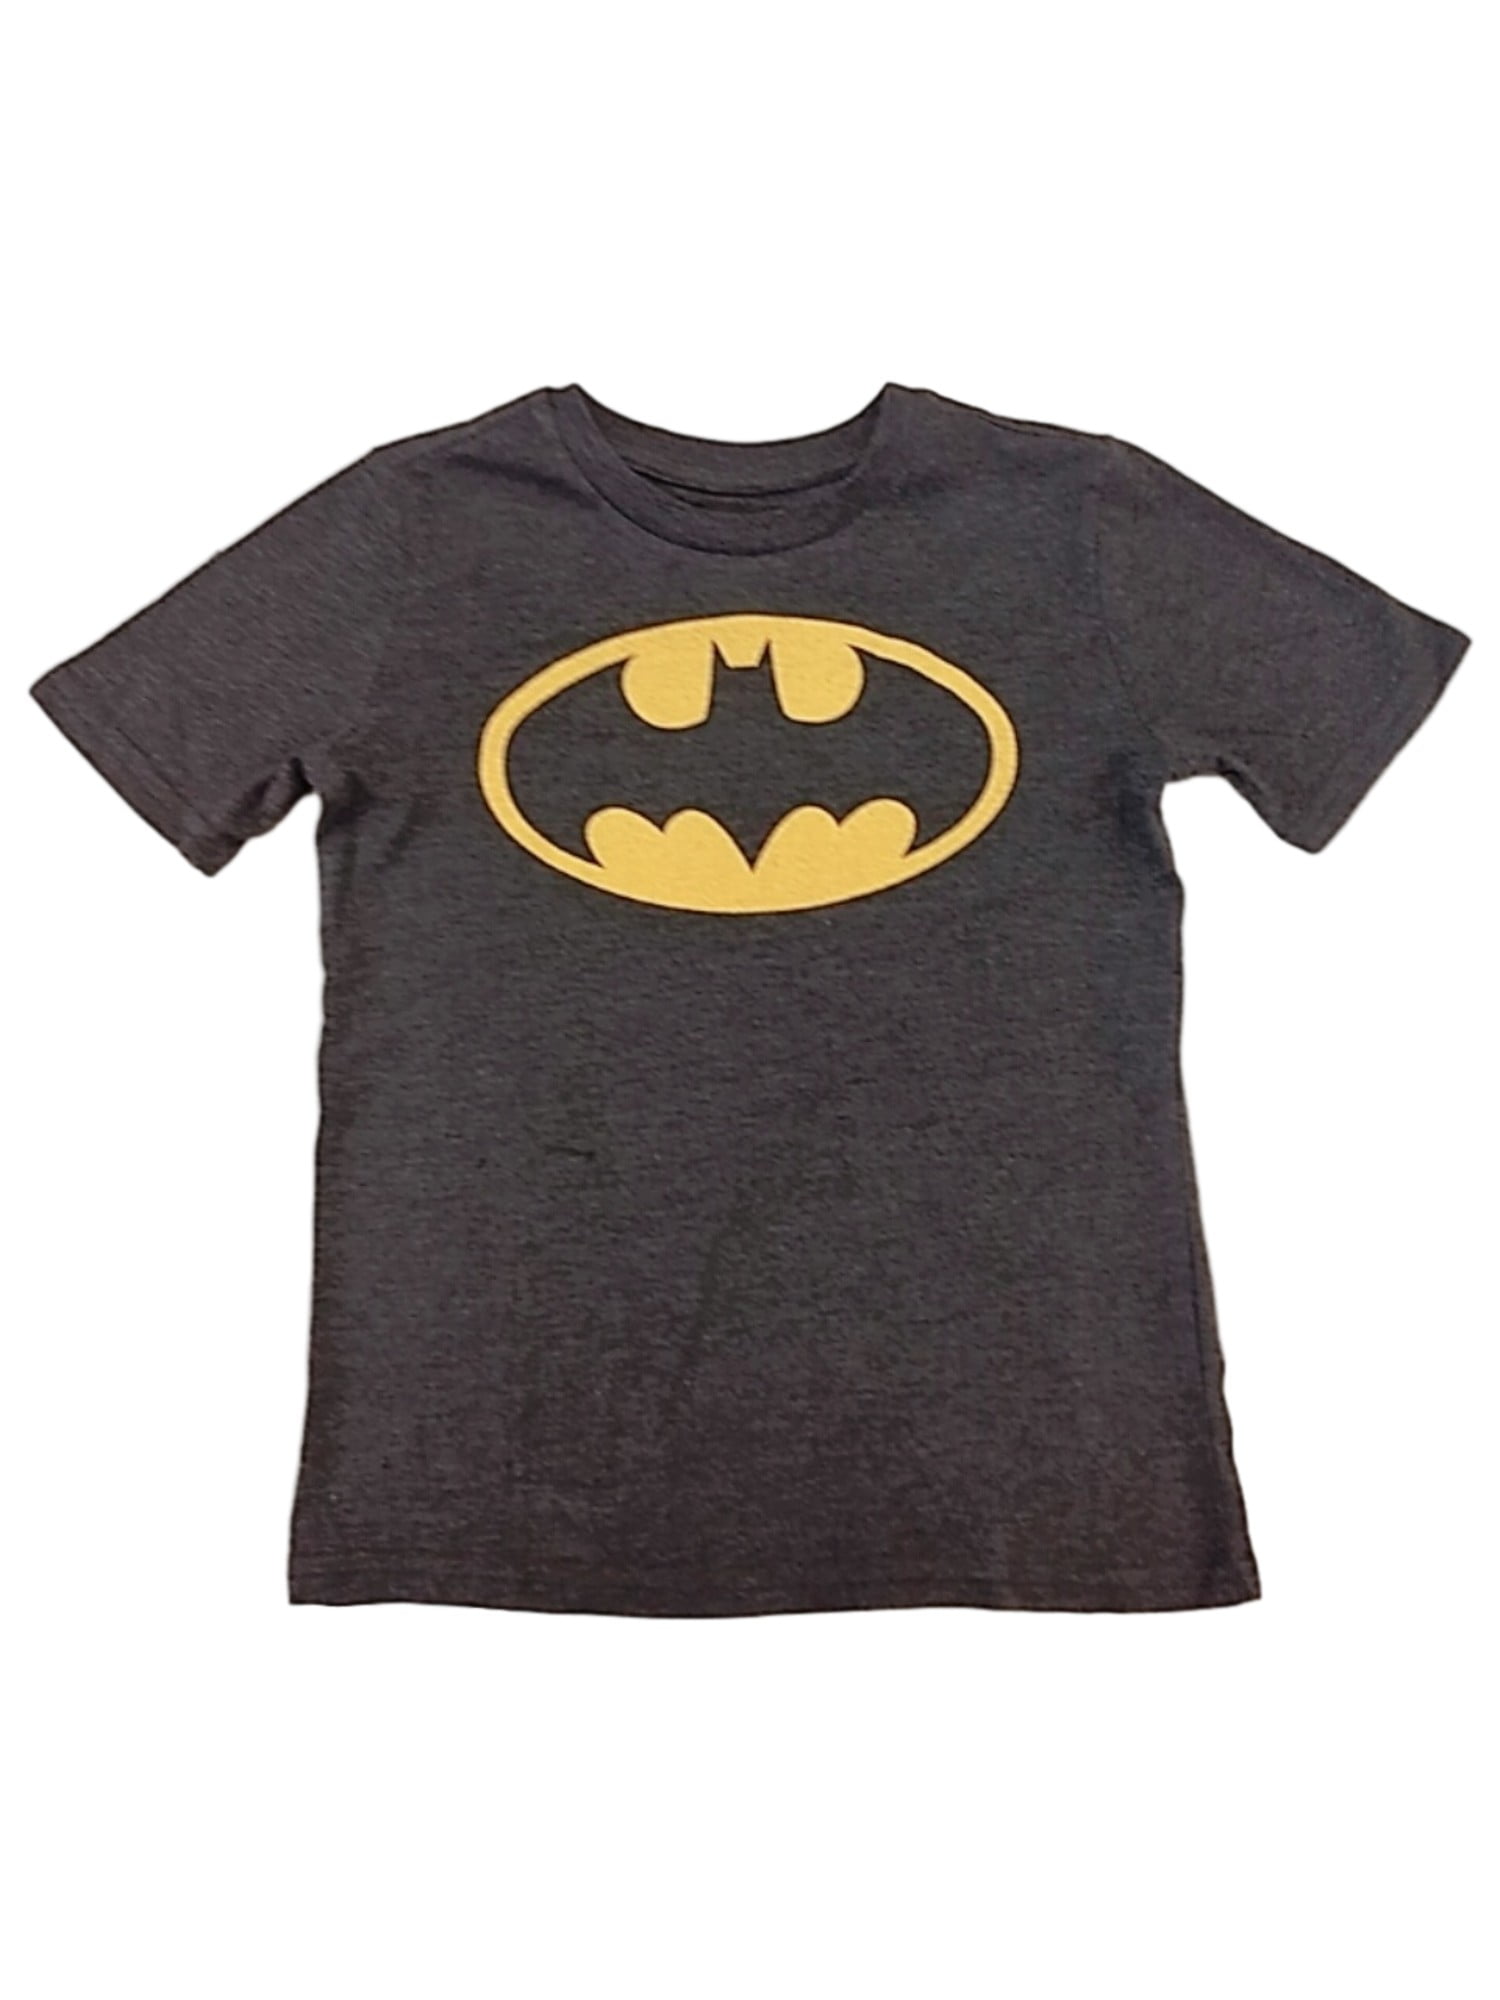 mens urban street marvel youth Official Batman t shirts DC comics WB tm tees 